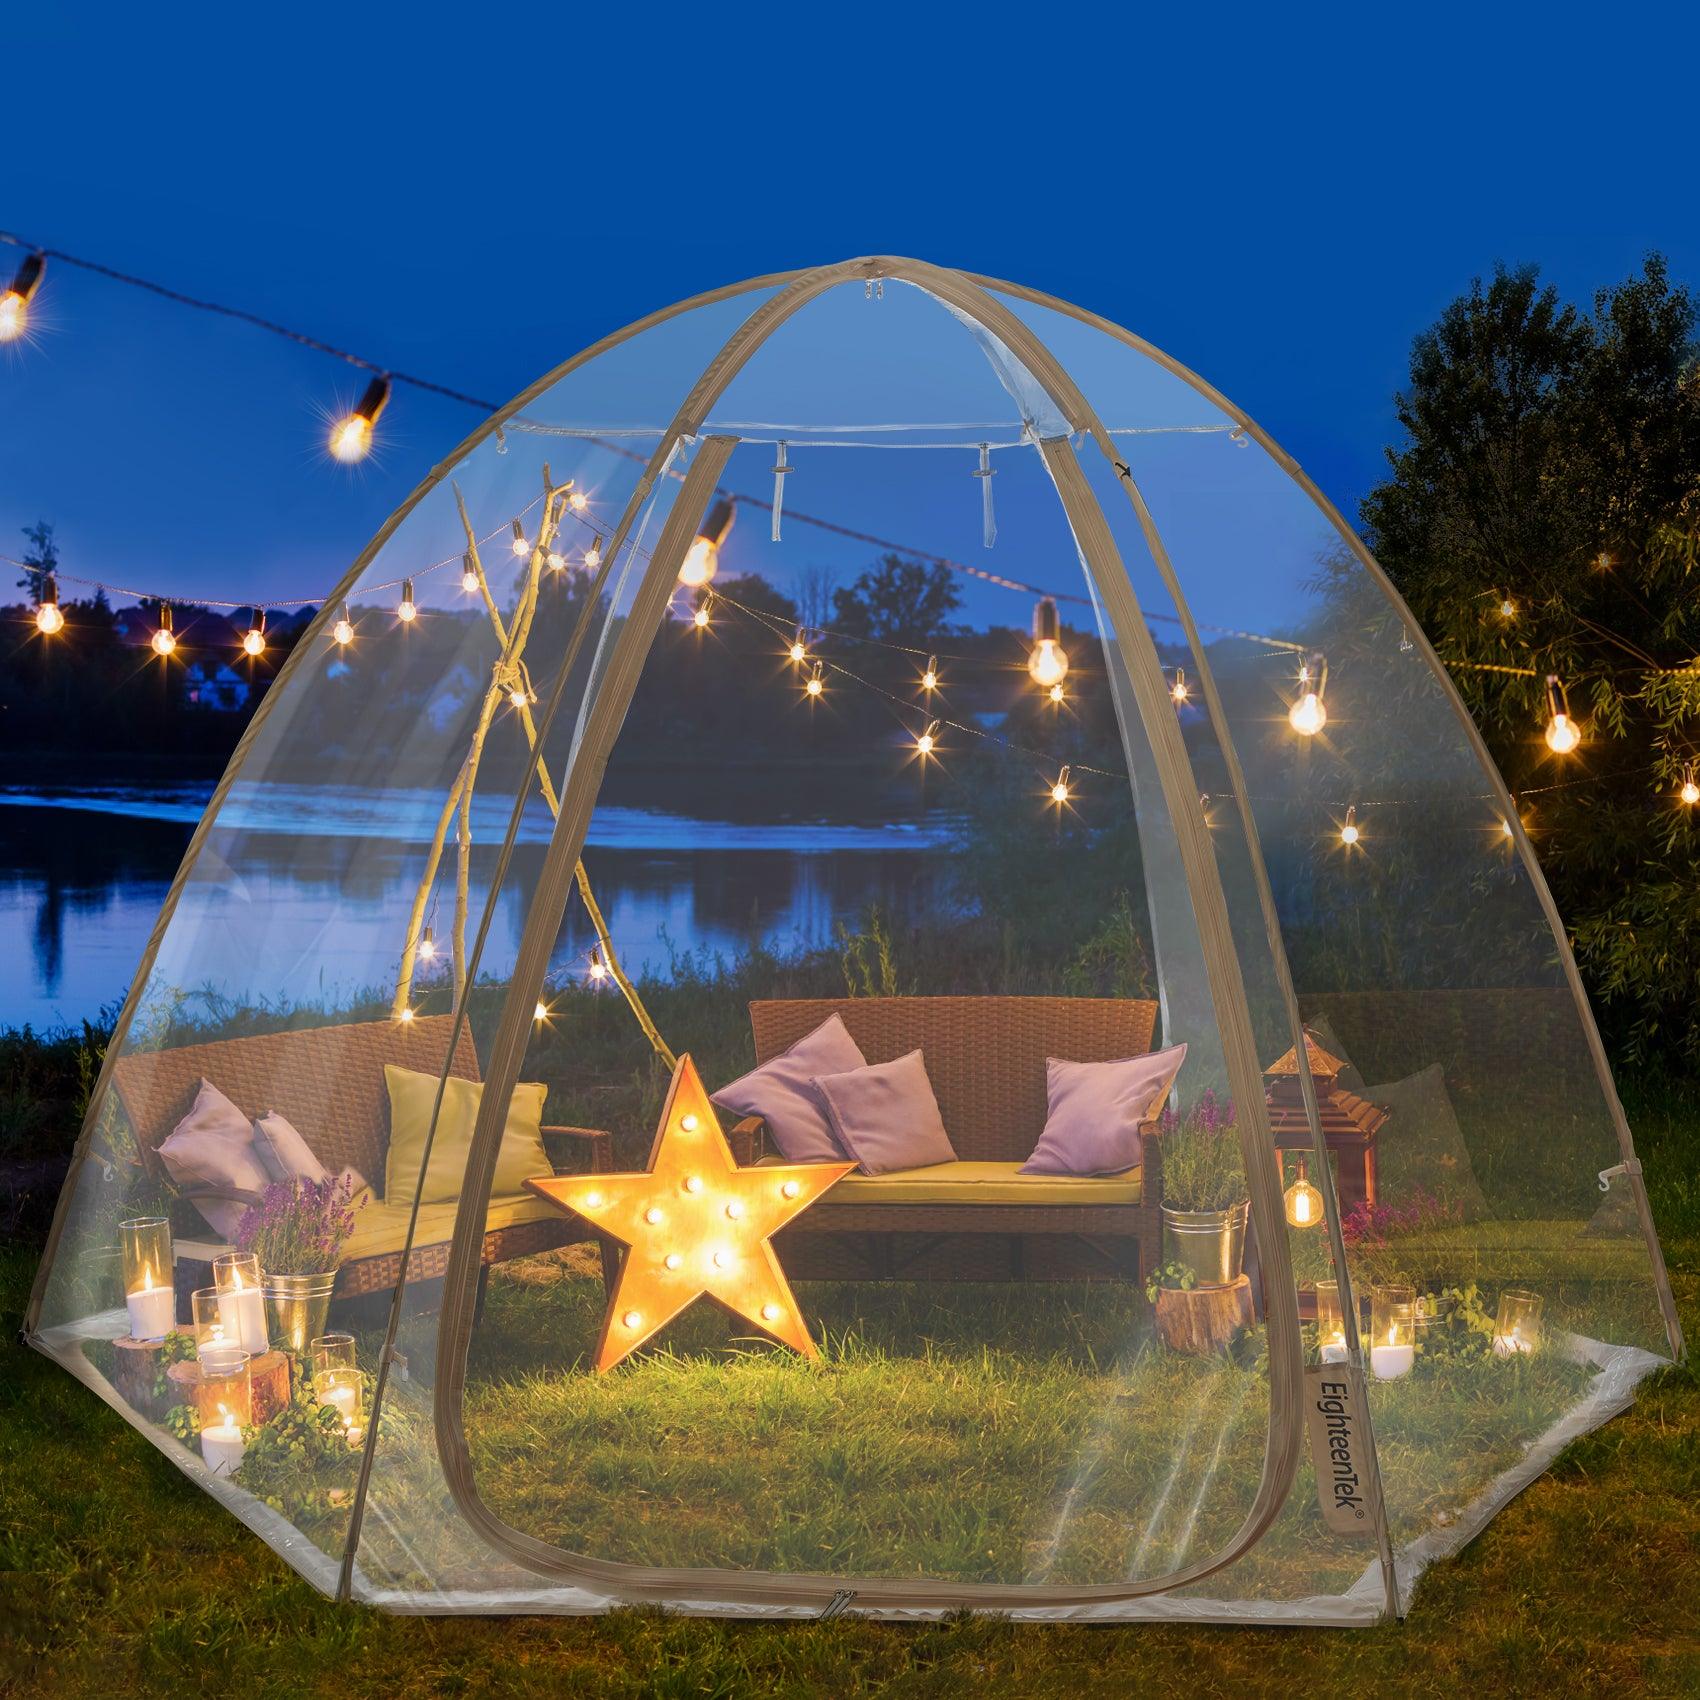 eighteentek bubble tent for stargazing